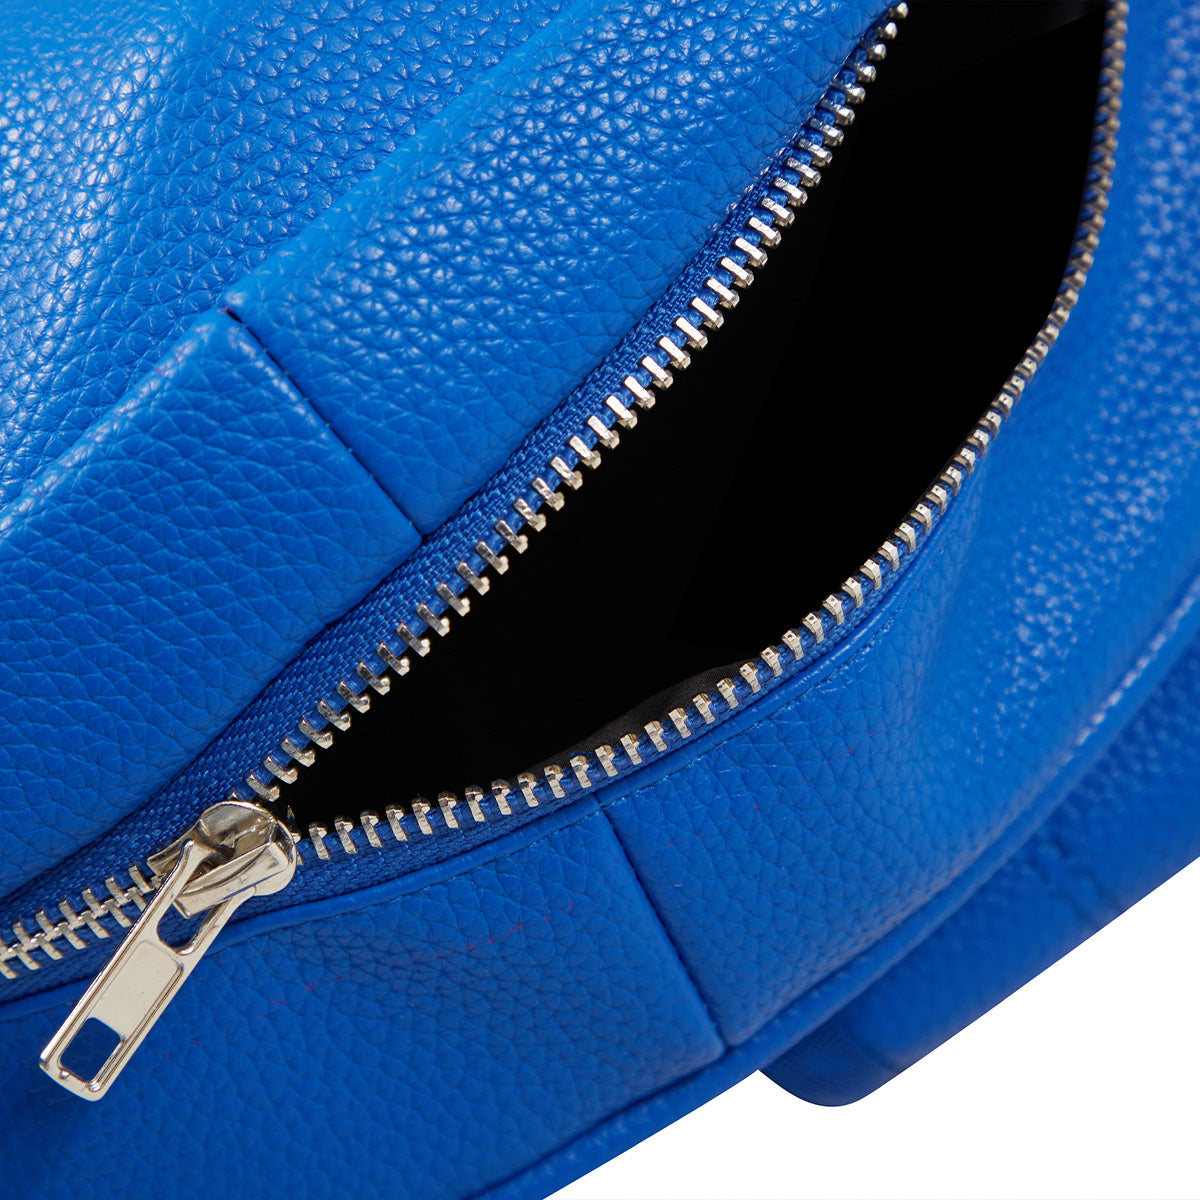 Kakazzy Leather Bag Blue